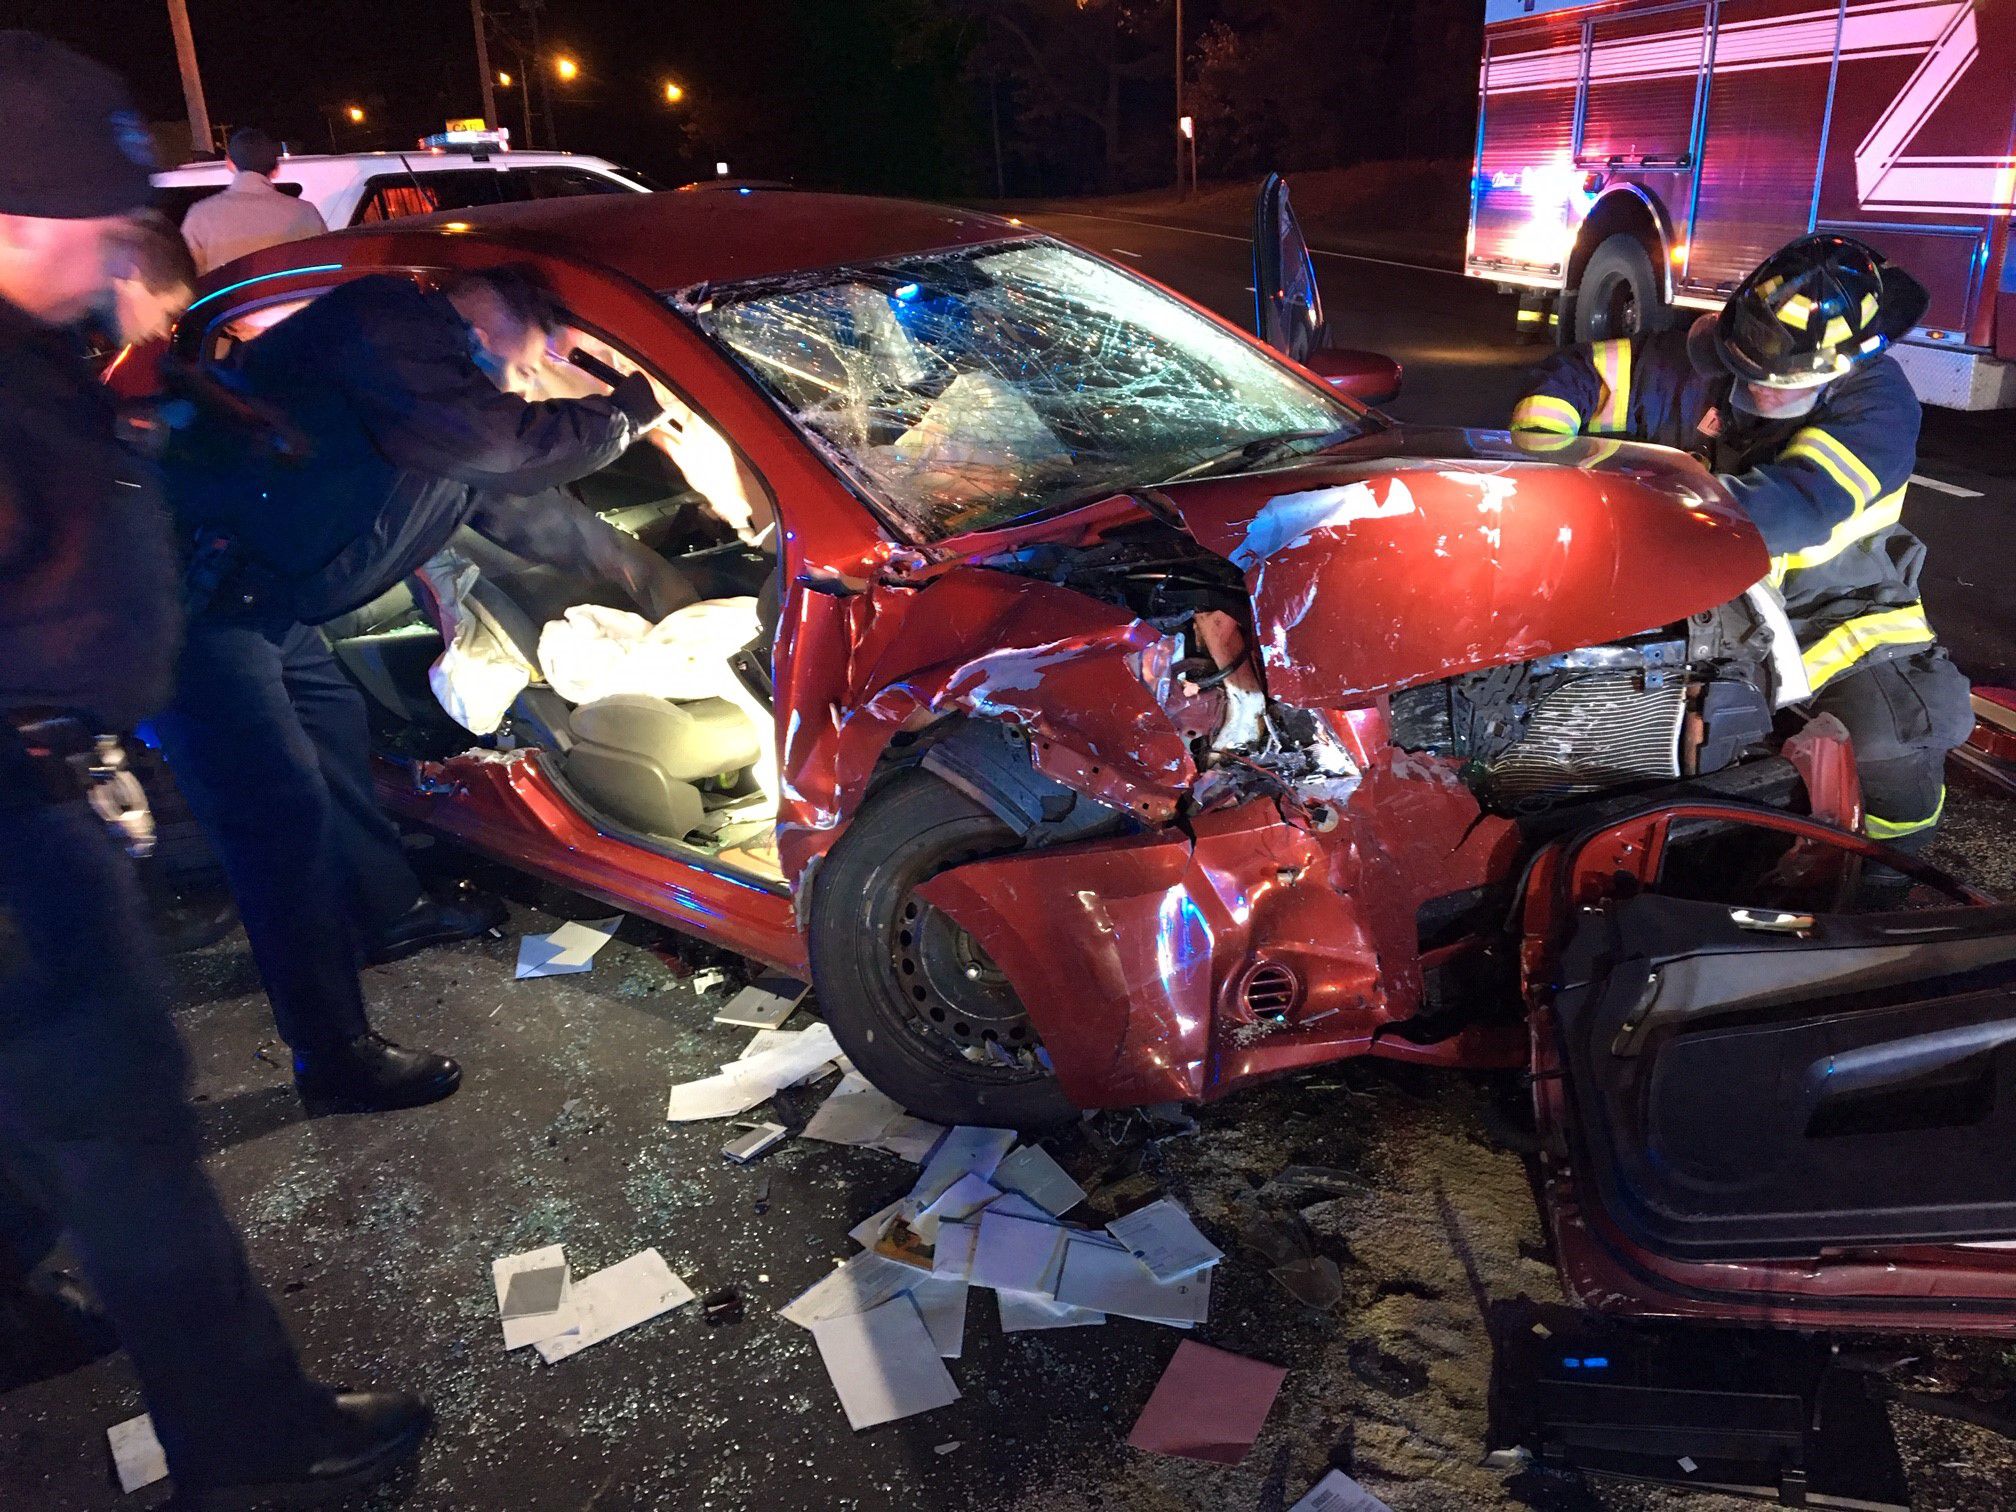 Springfield crash leaves 2 injured, woman in car - masslive.com